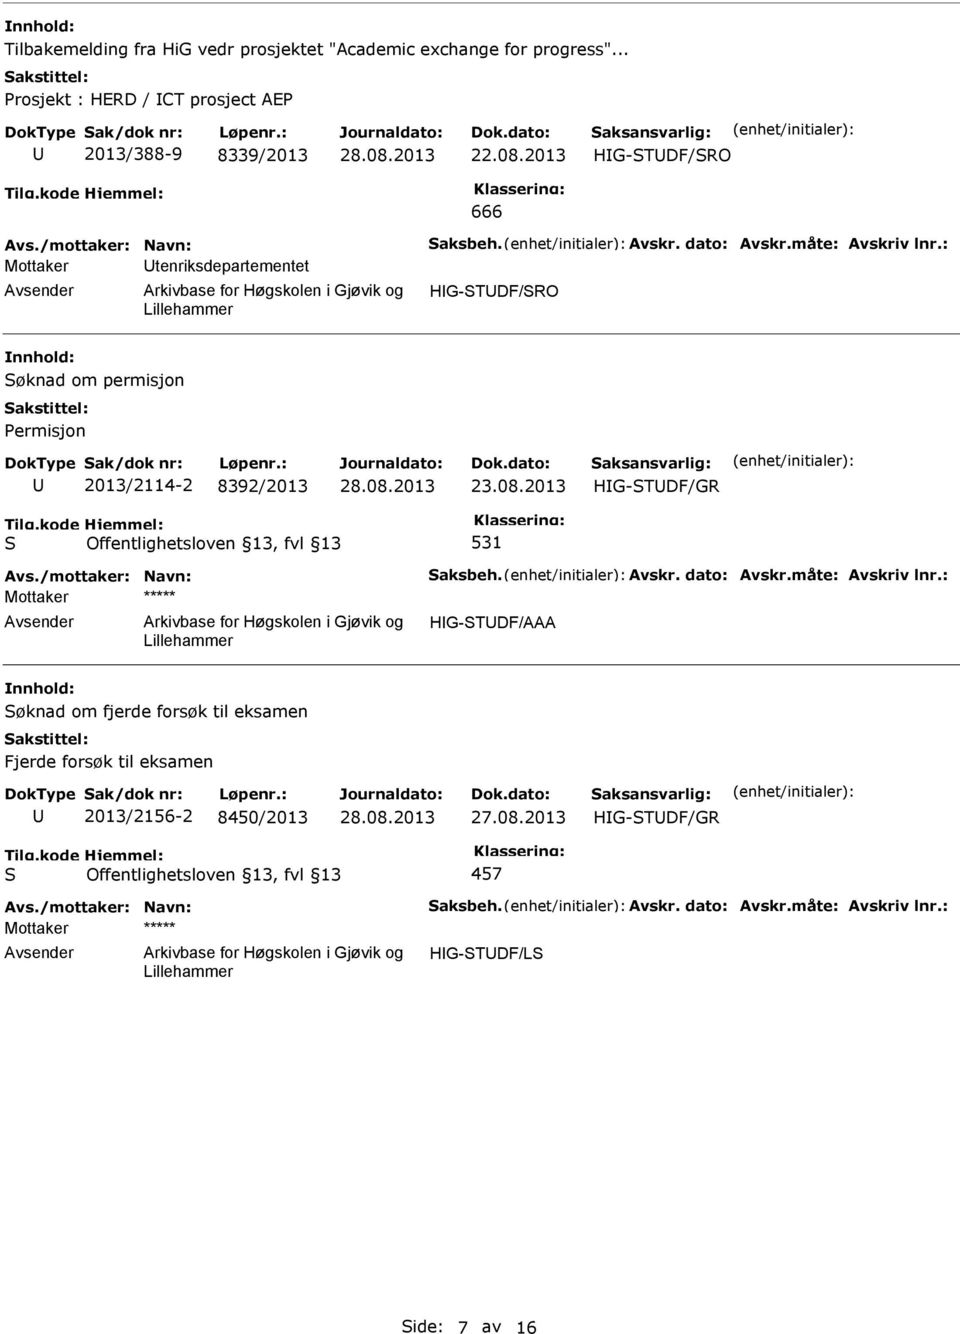 : Mottaker tenriksdepartementet HG-TDF/RO øknad om permisjon Permisjon 2013/2114-2 8392/2013 23.08.2013 HG-TDF/GR 531 Avs./mottaker: Navn: aksbeh.